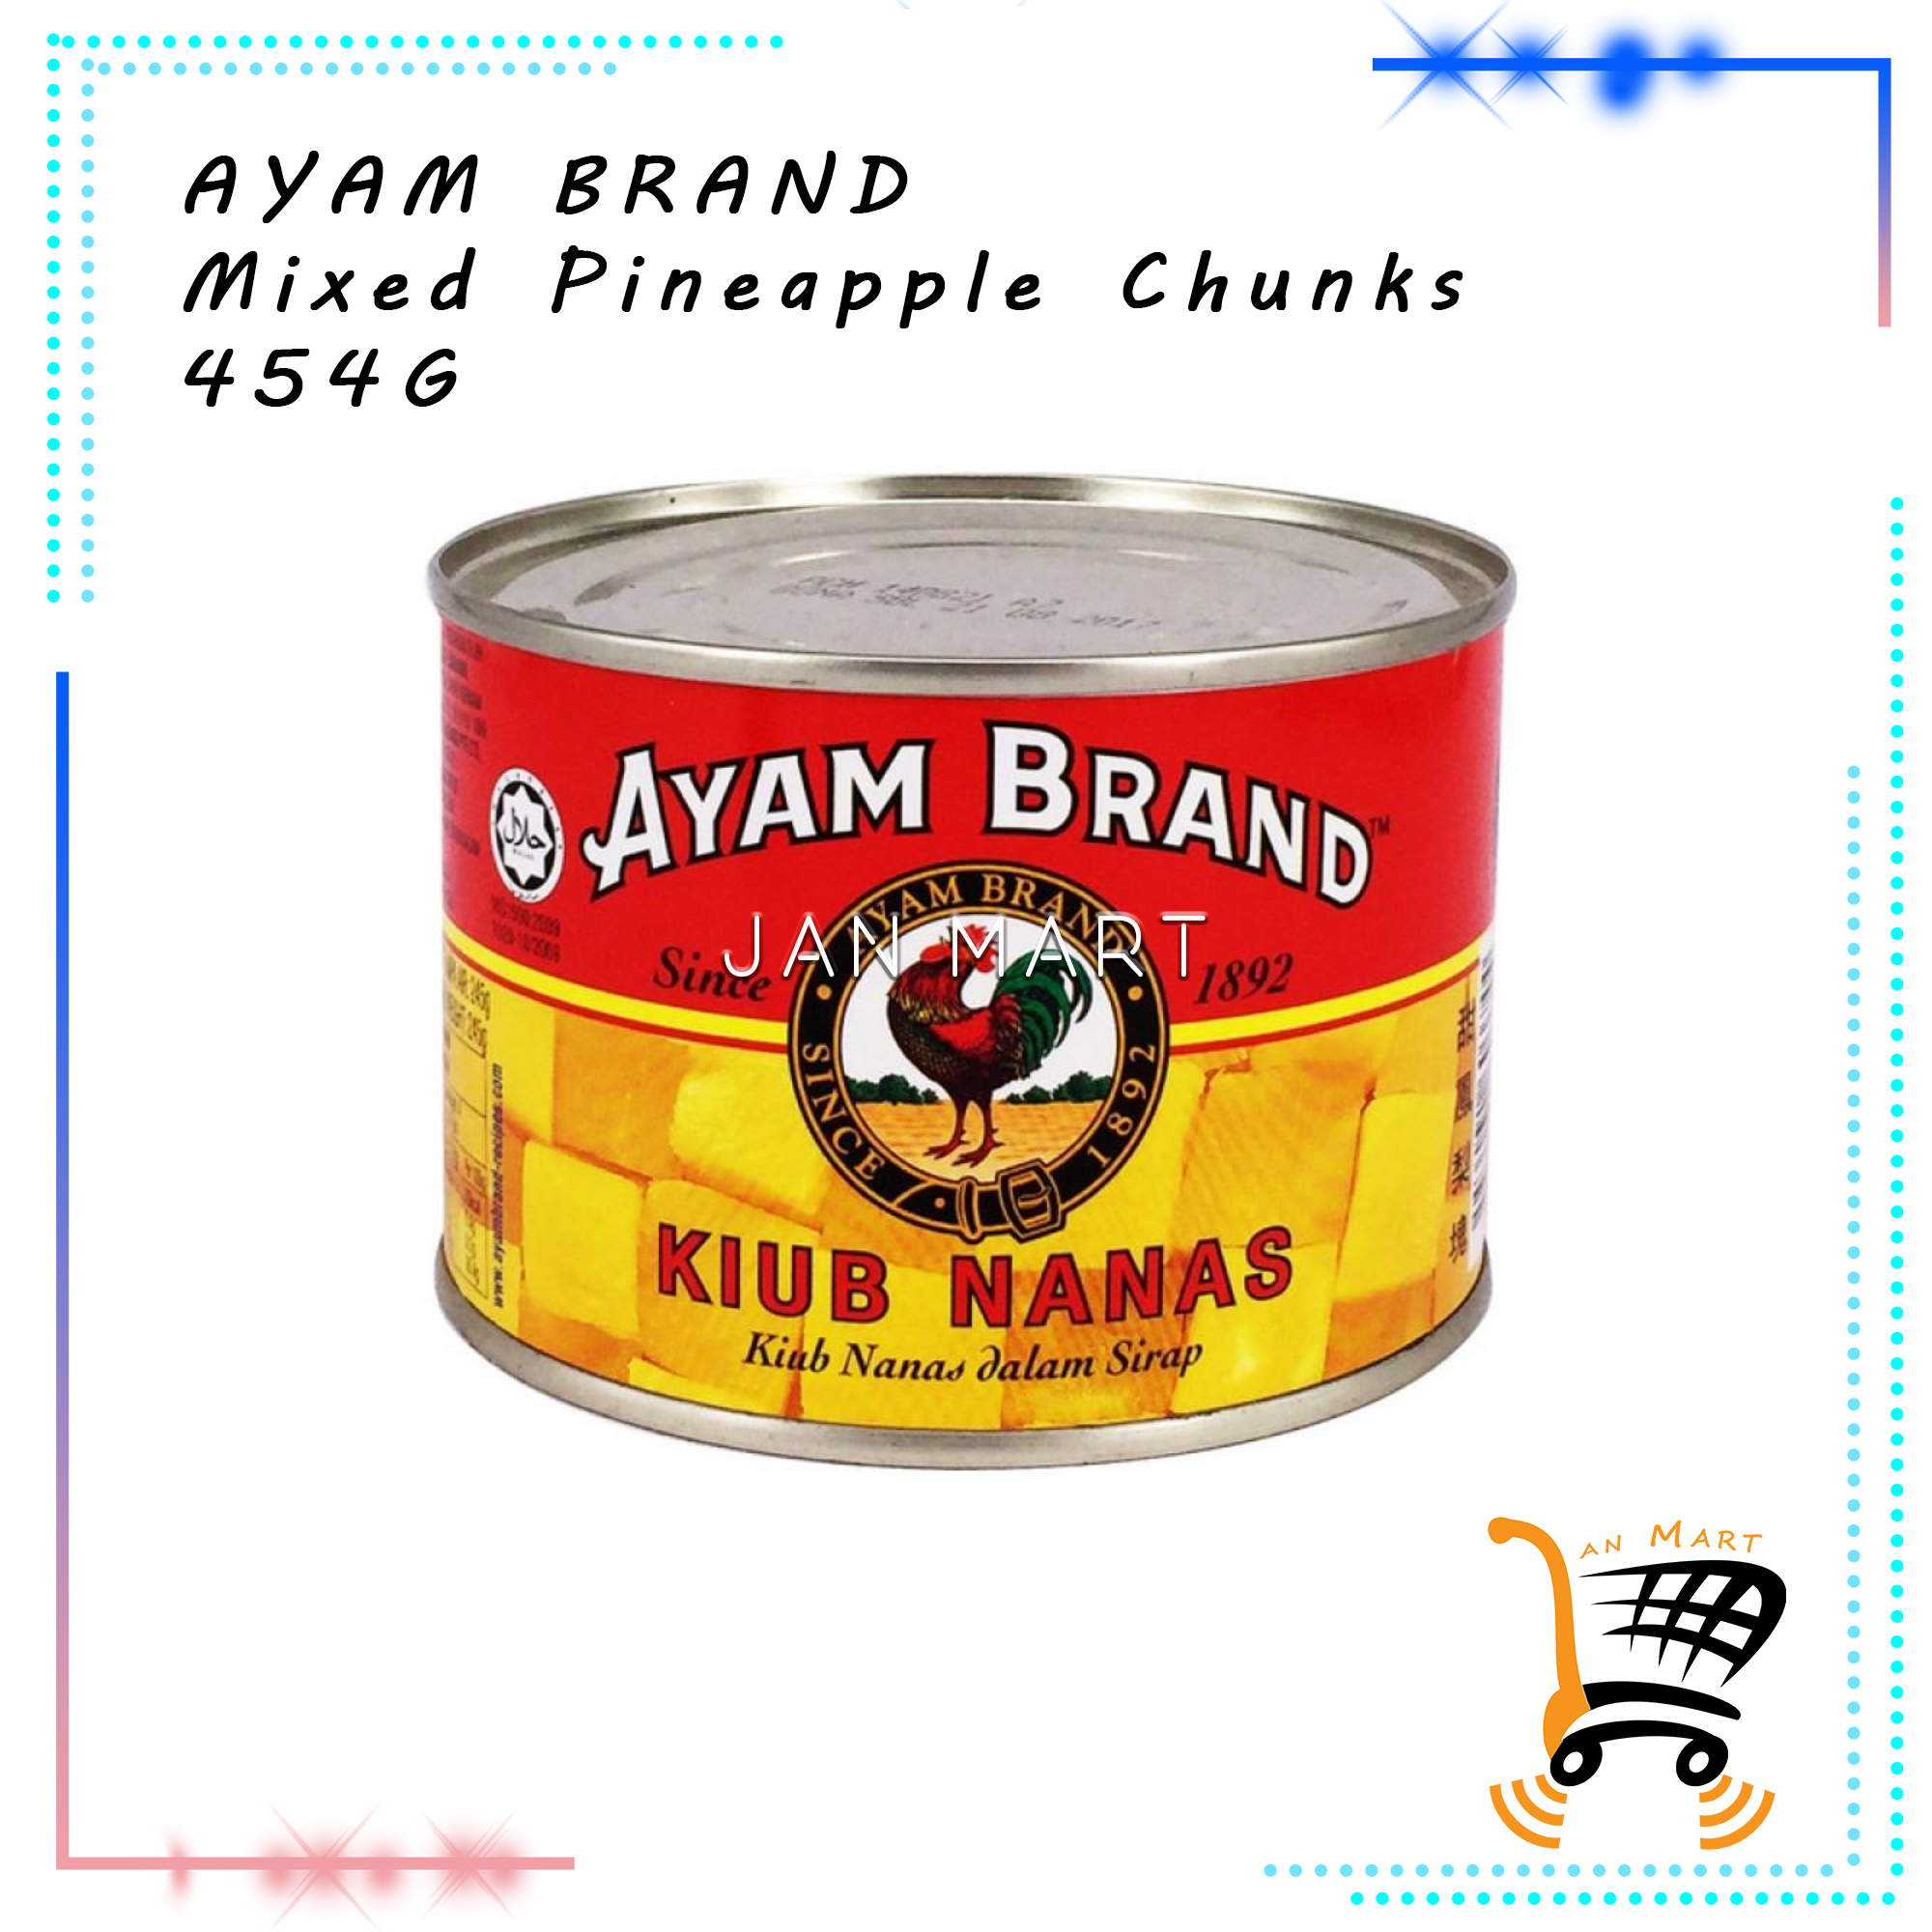 AYAM BRAND Mixed Pineapple Chunks 454G